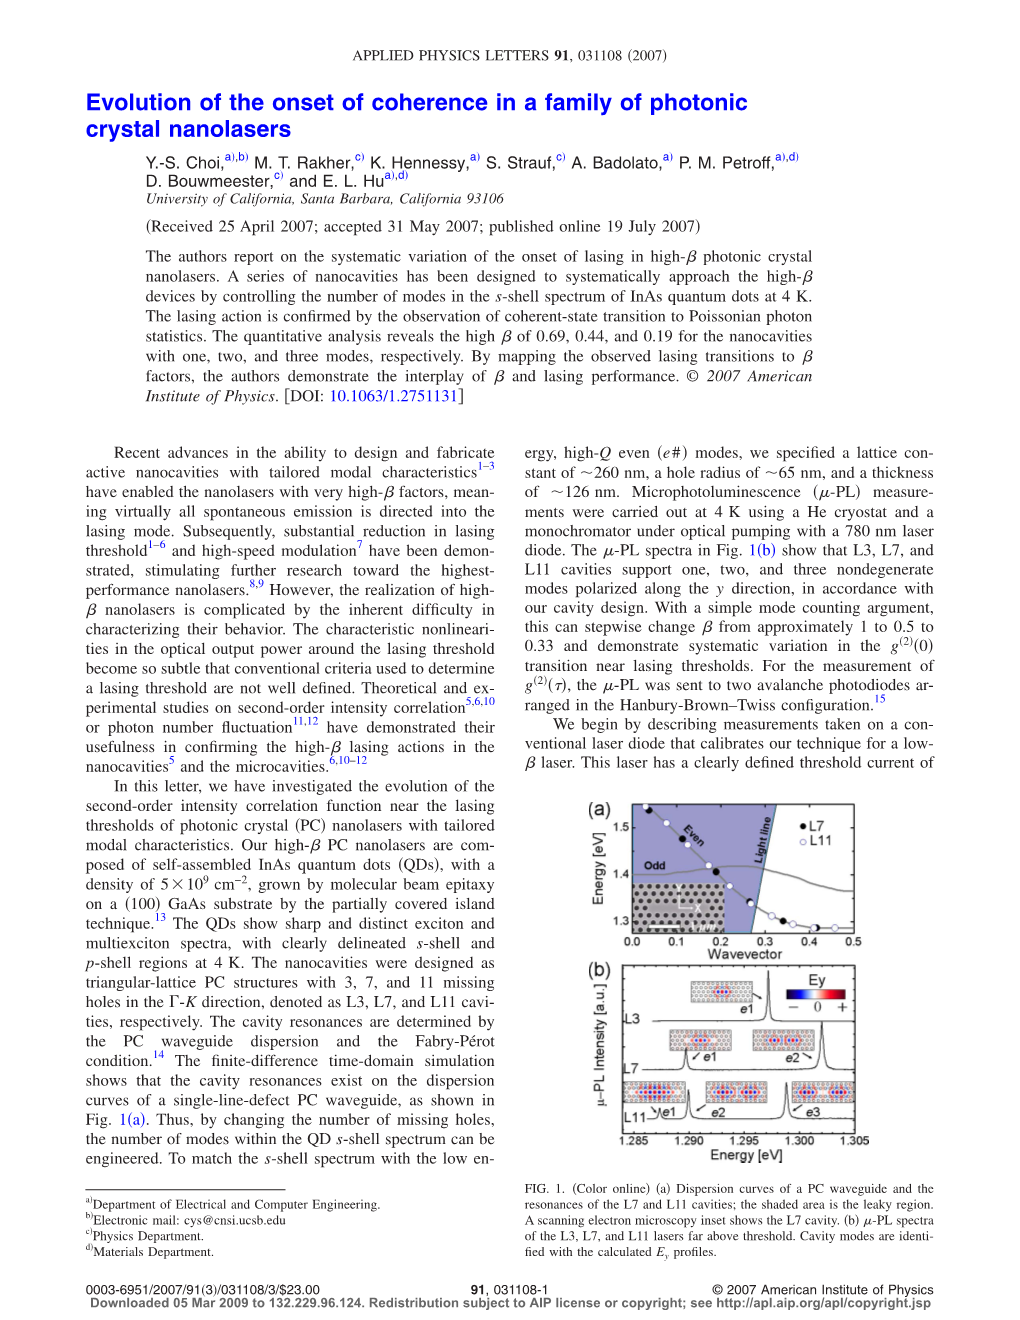 Evolution of the Onset of Coherence in a Family of Photonic Crystal Nanolasers ͒ ͒ ͒ ͒ ͒ ͒ ͒ ͒ Y.-S